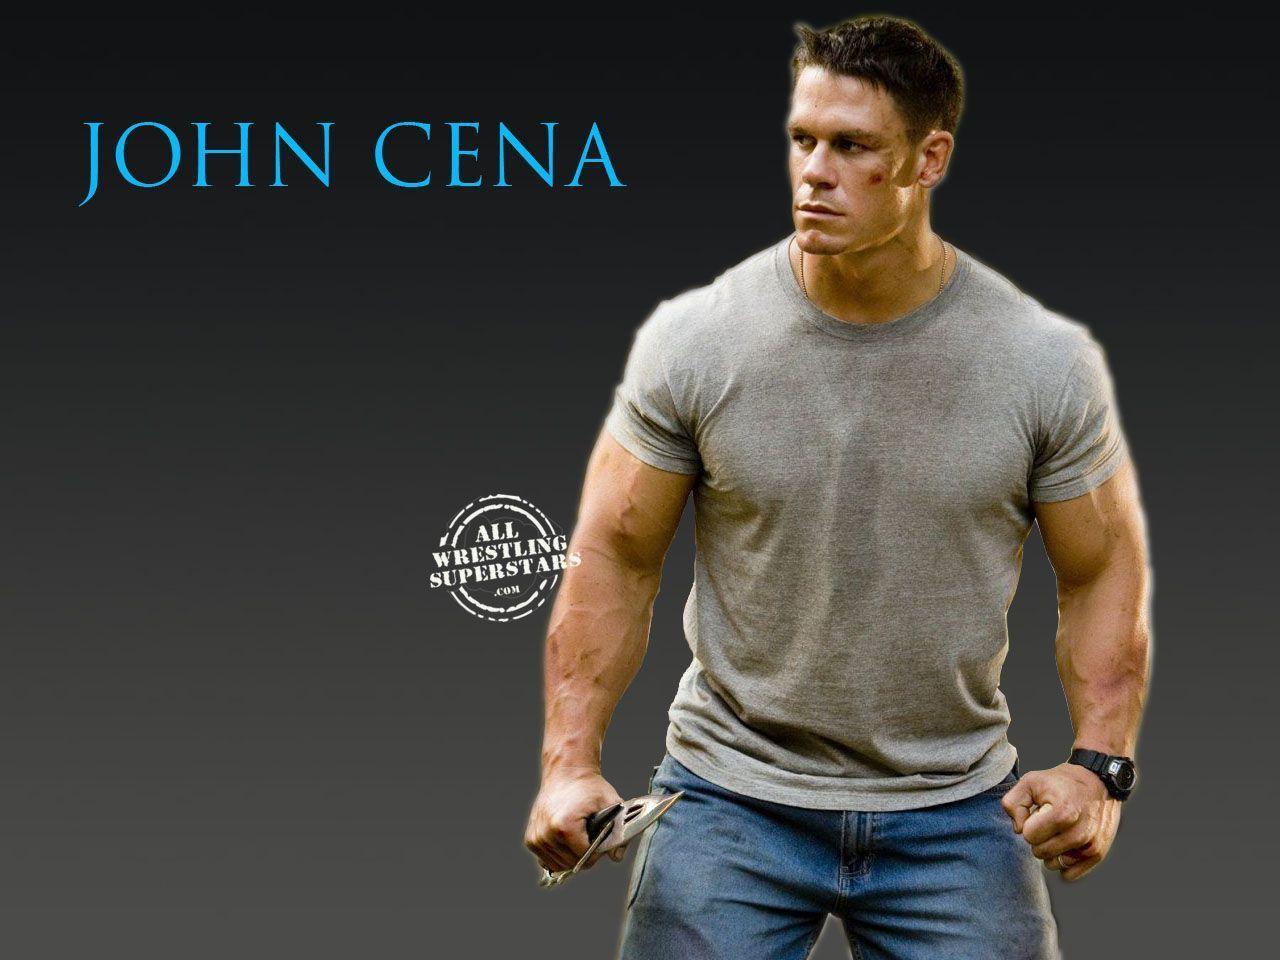 Photosforwallpaper 2014 2015: Cool John Cena Wallpaper HQ 480P 2015